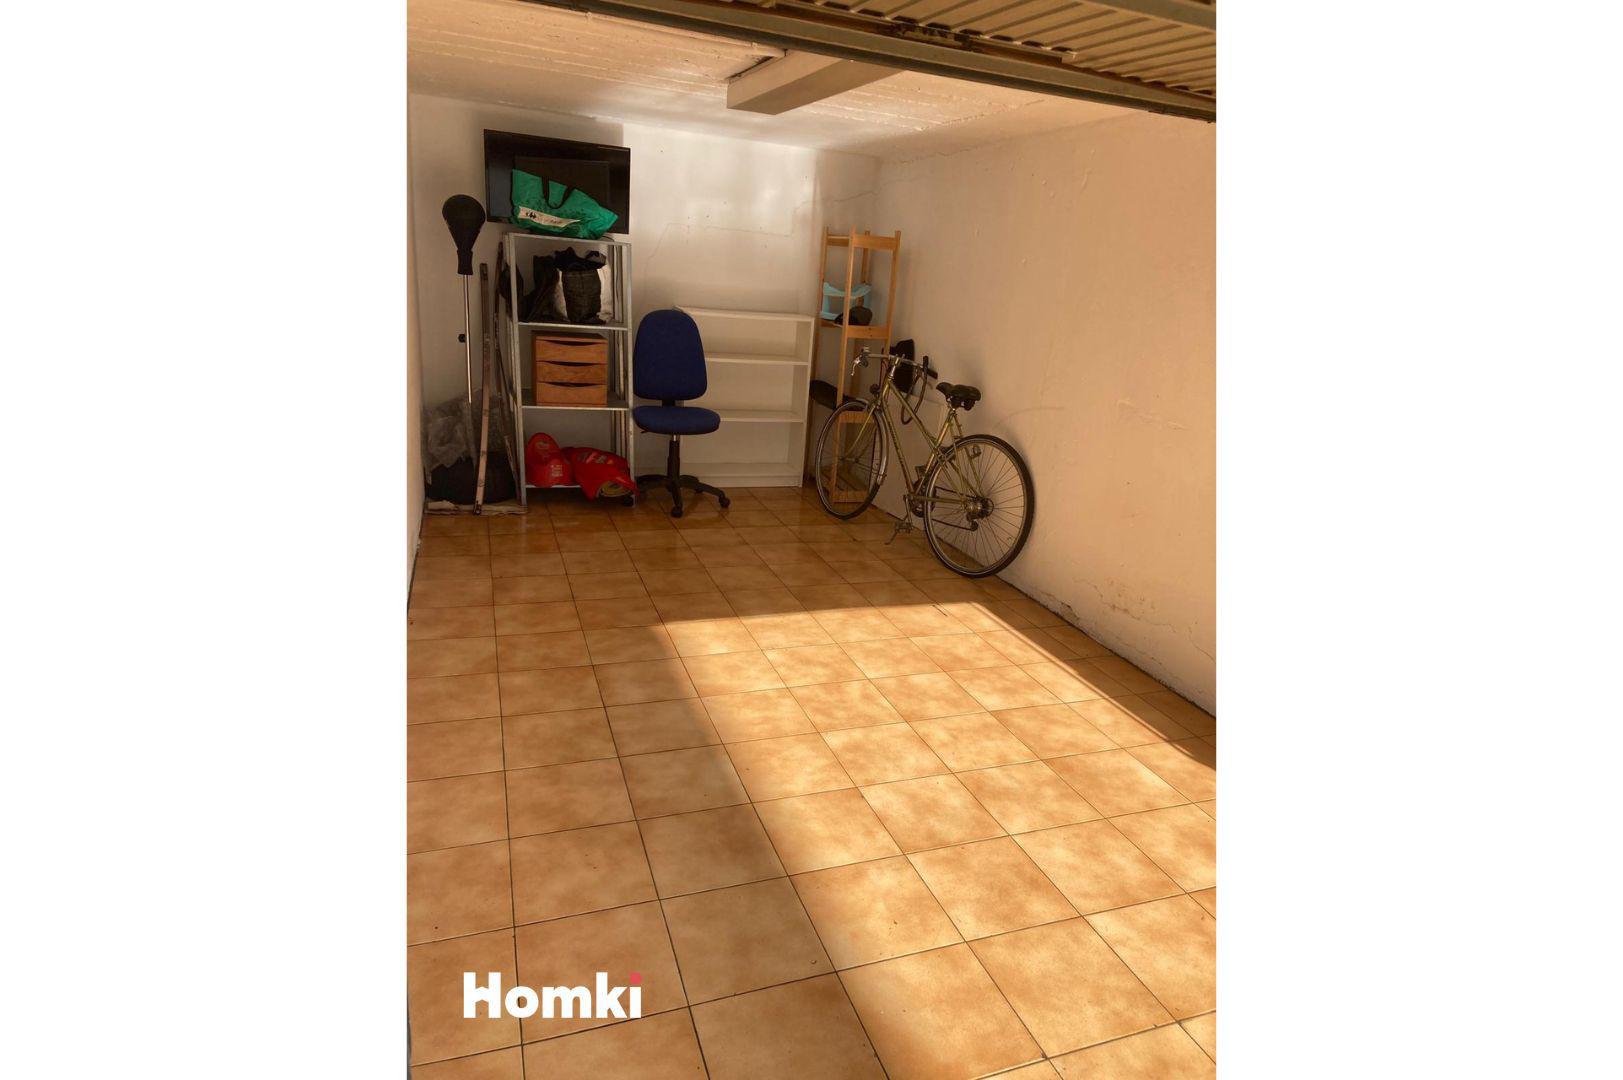 Homki - Vente Garage  de 12.0 m² à Antibes 06160